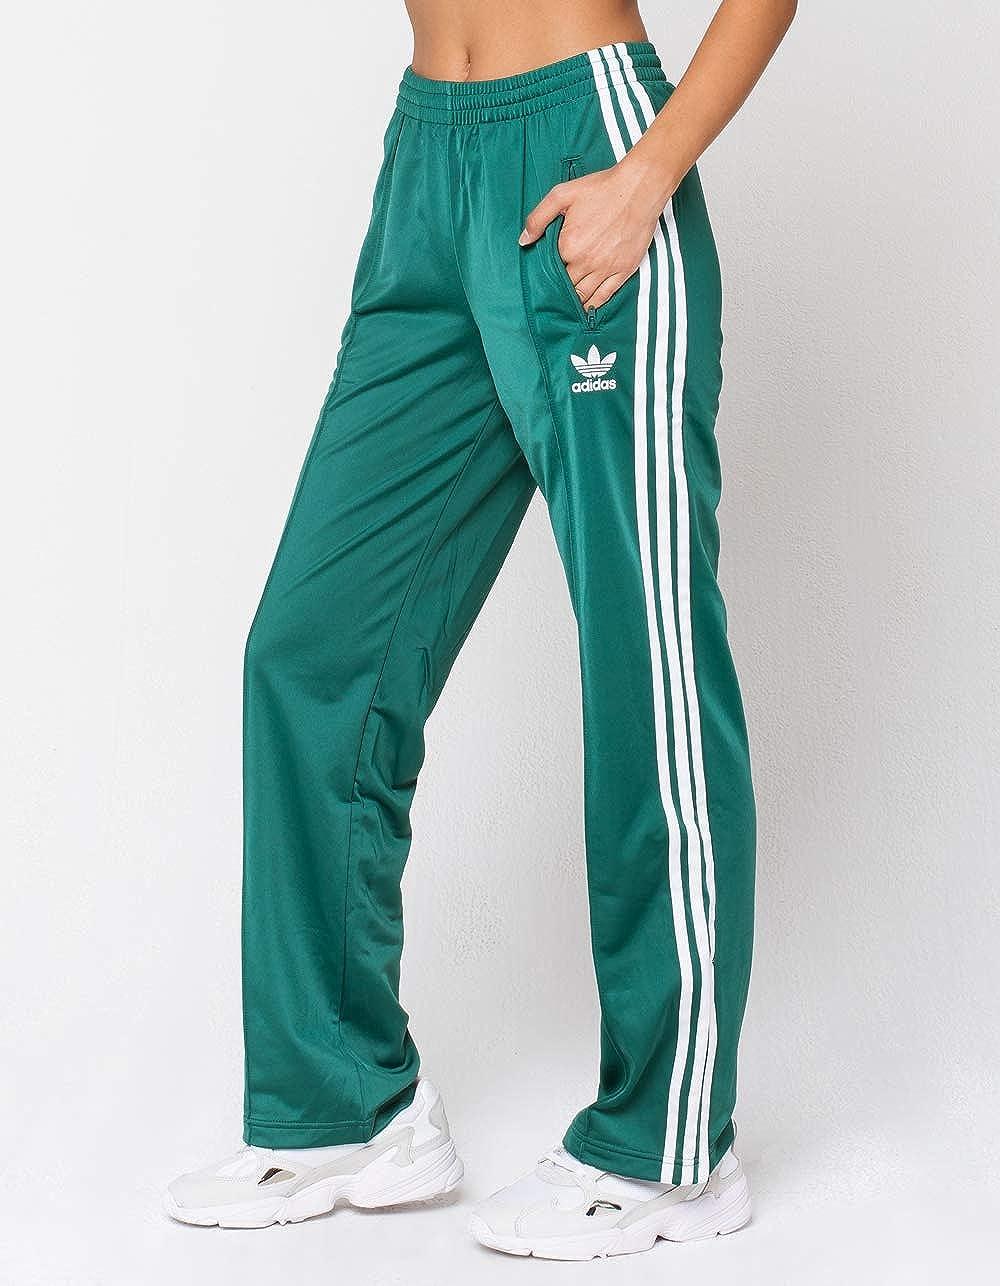 ED4791] Womens Adidas Originals Firebird Track Pants | eBay